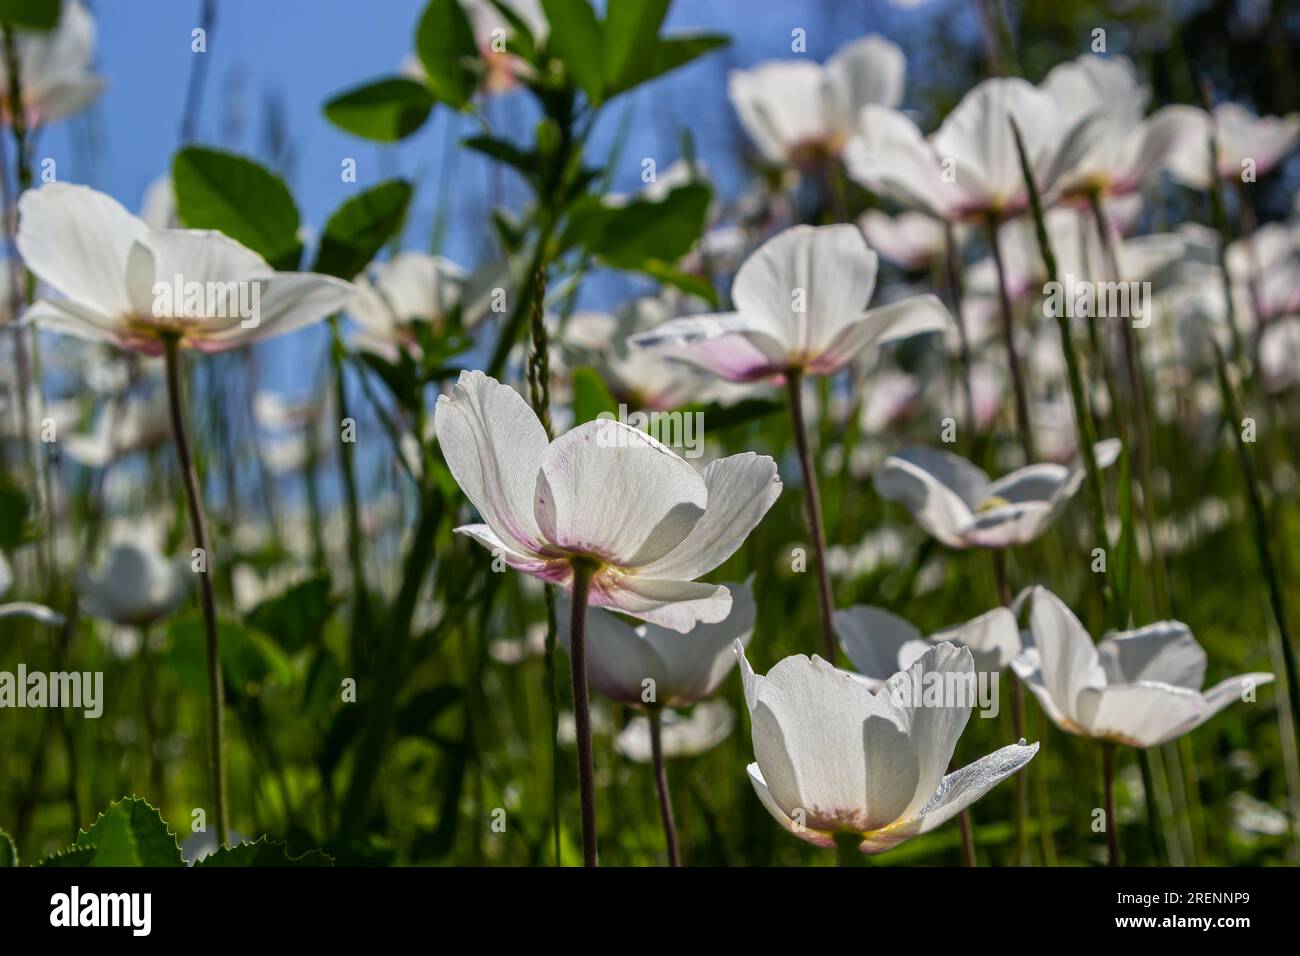 White spring flowers in green grass lawn. White anemone flowers. Anemone sylvestris, snowdrop anemone, windflower. Stock Photo